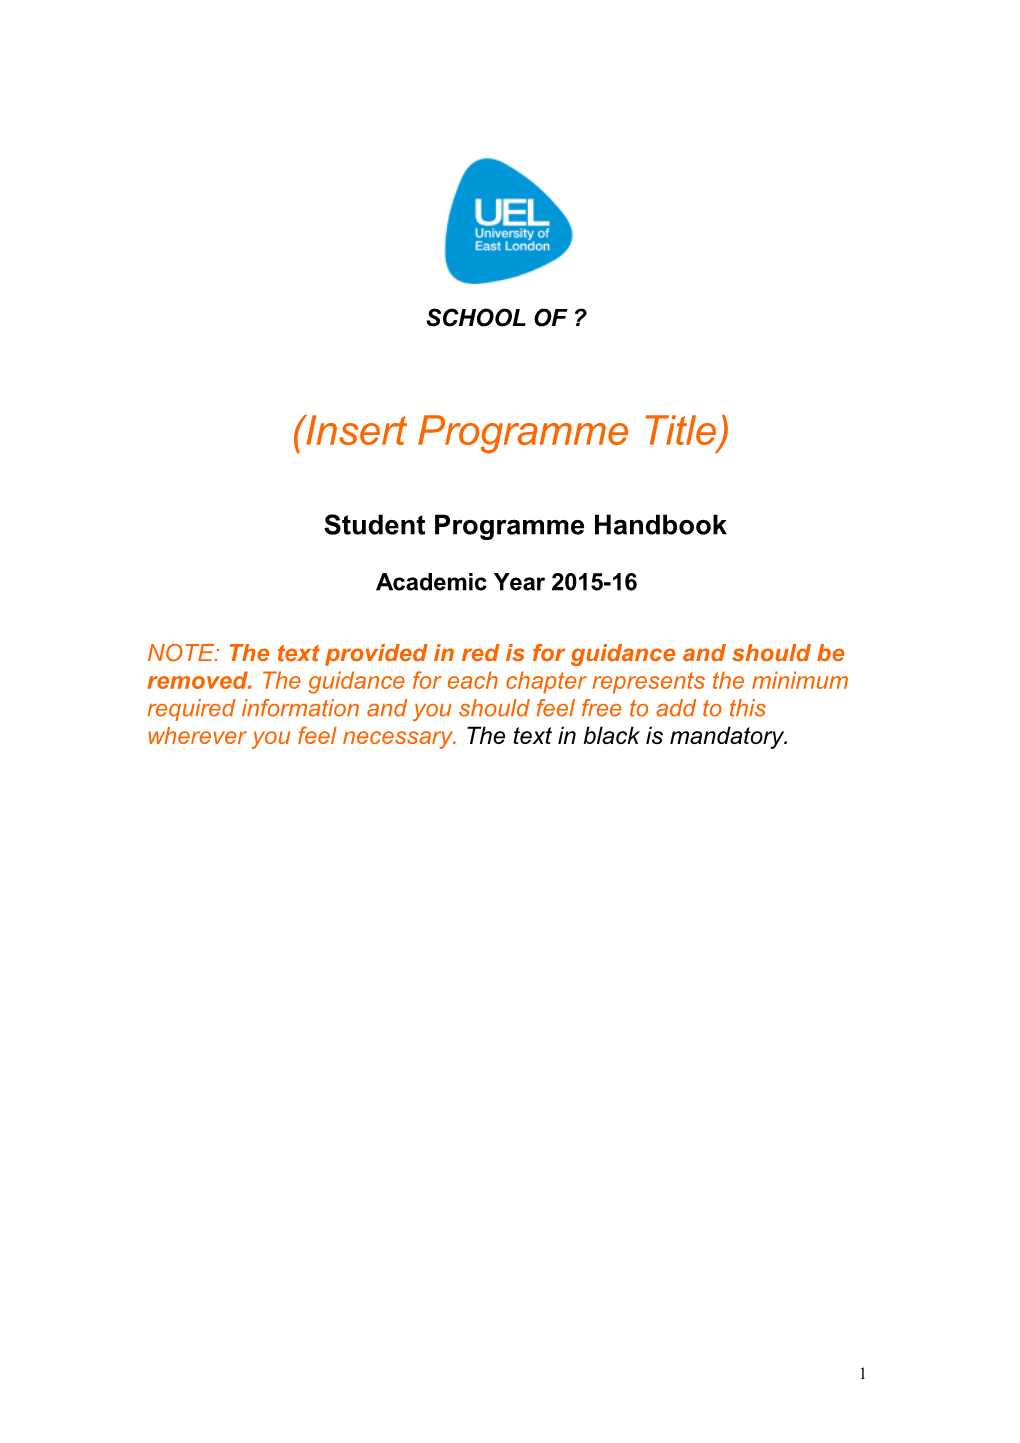 Student Programme Handbook